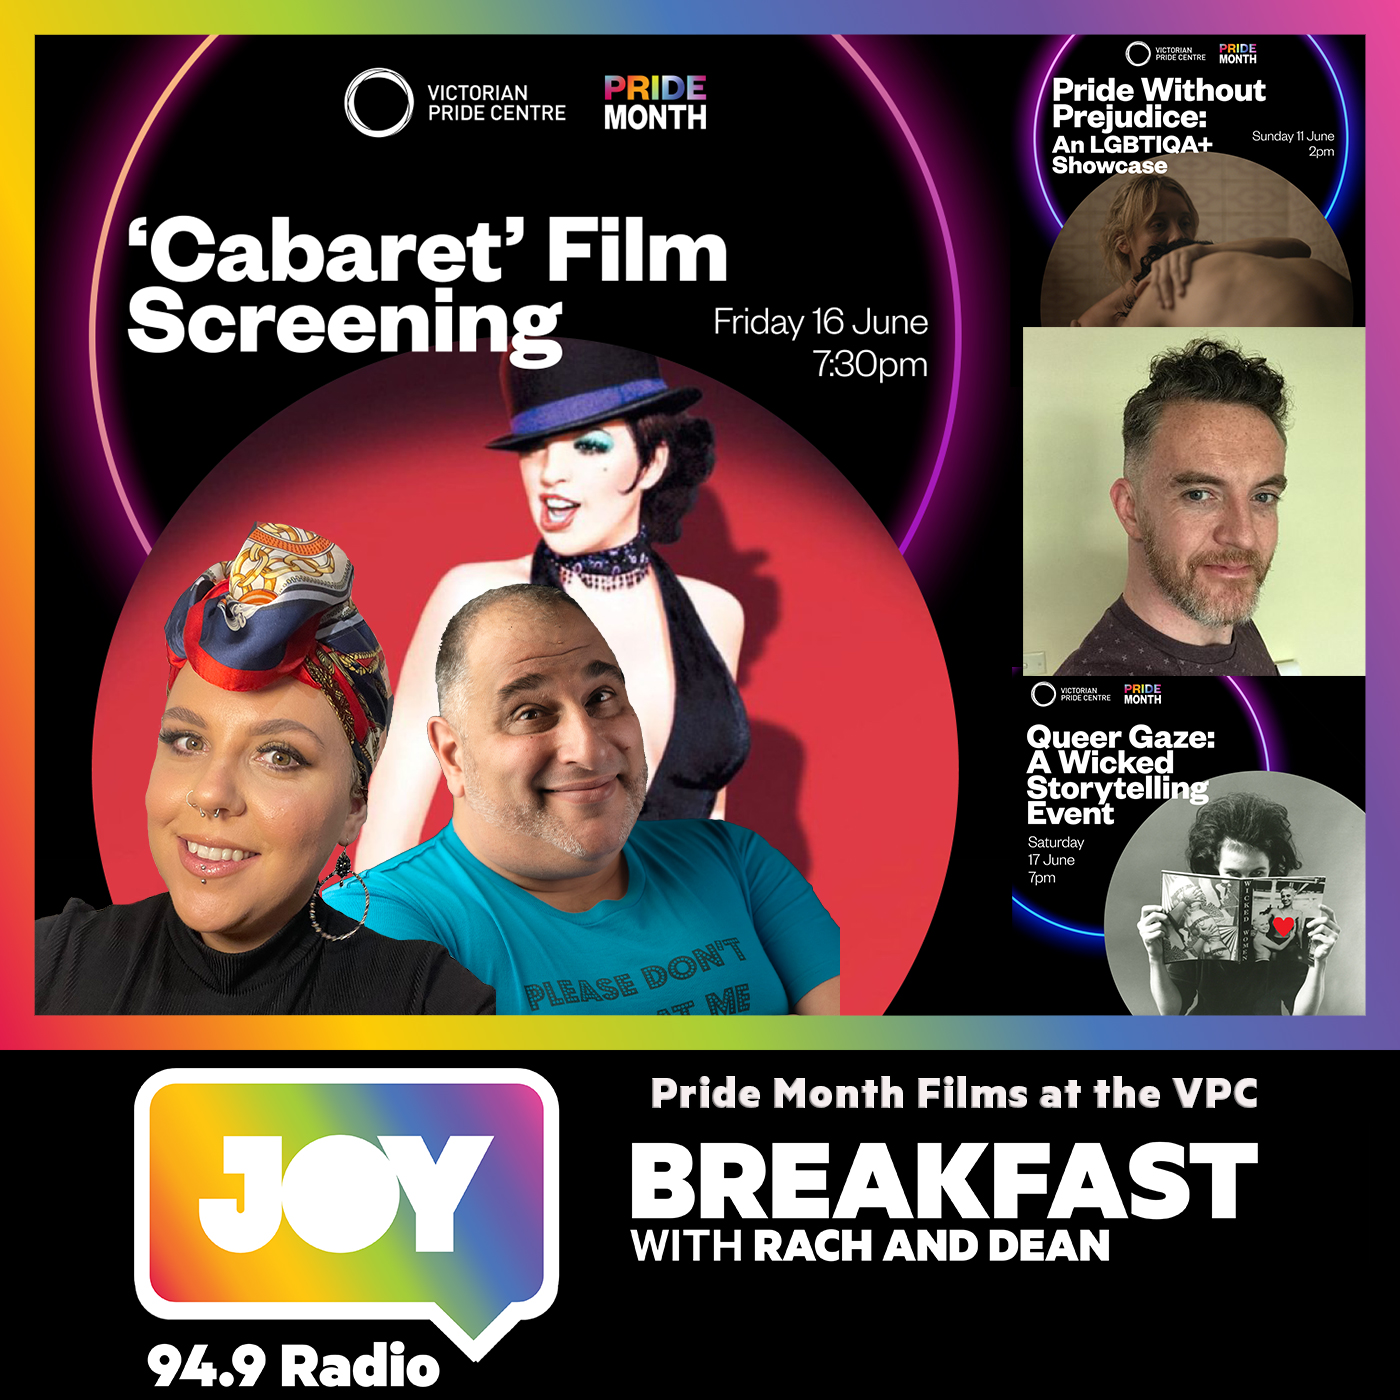 Pride Month movies at the Victorian Pride Centre